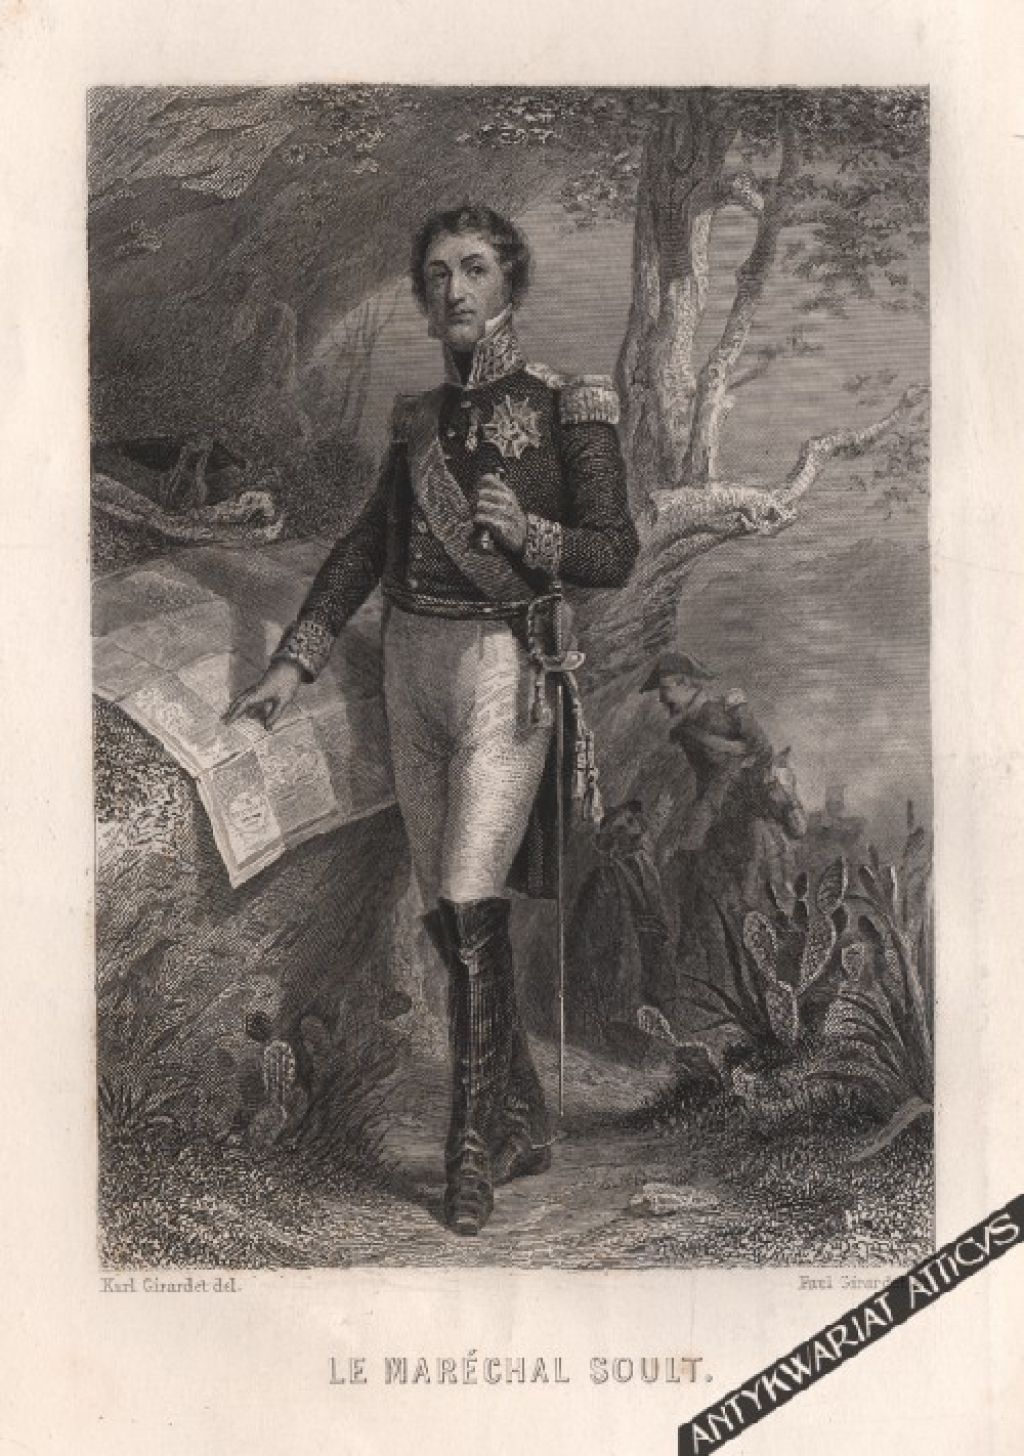 [rycina, ok. 1840] Le marechal Soult [marszałek Nicolas Jean de Dieu Soult]